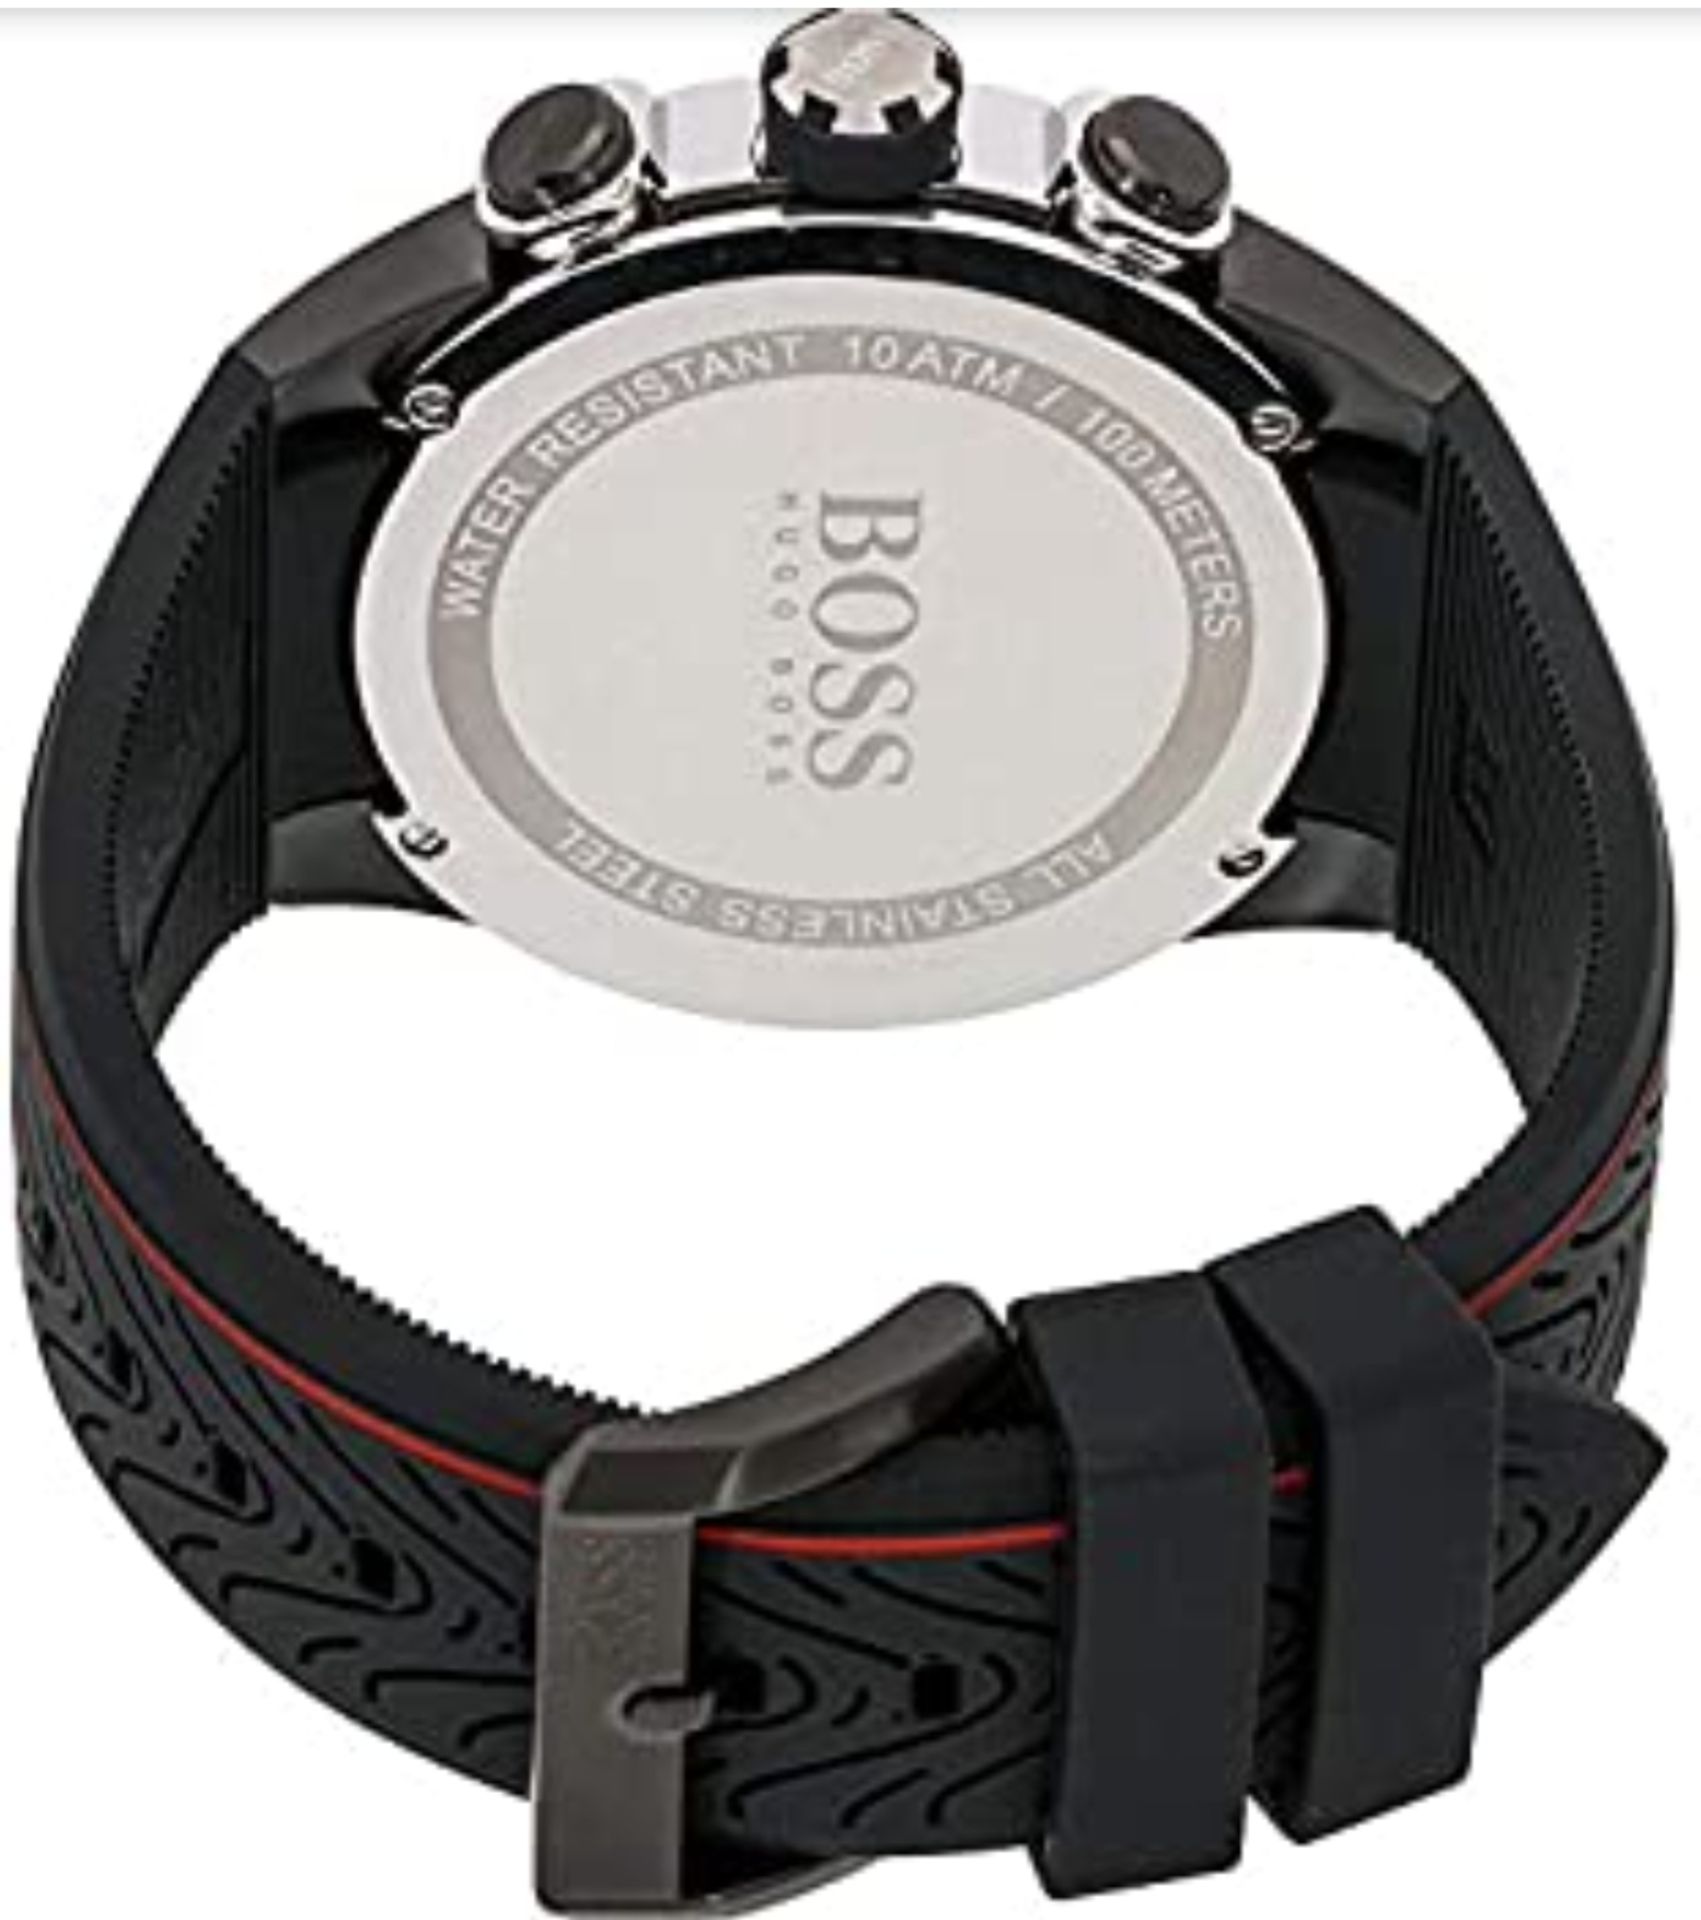 Hugo Boss Contemporary Sport Motorsport Analog Black Dial Men's Watch 1513284 - Image 2 of 3